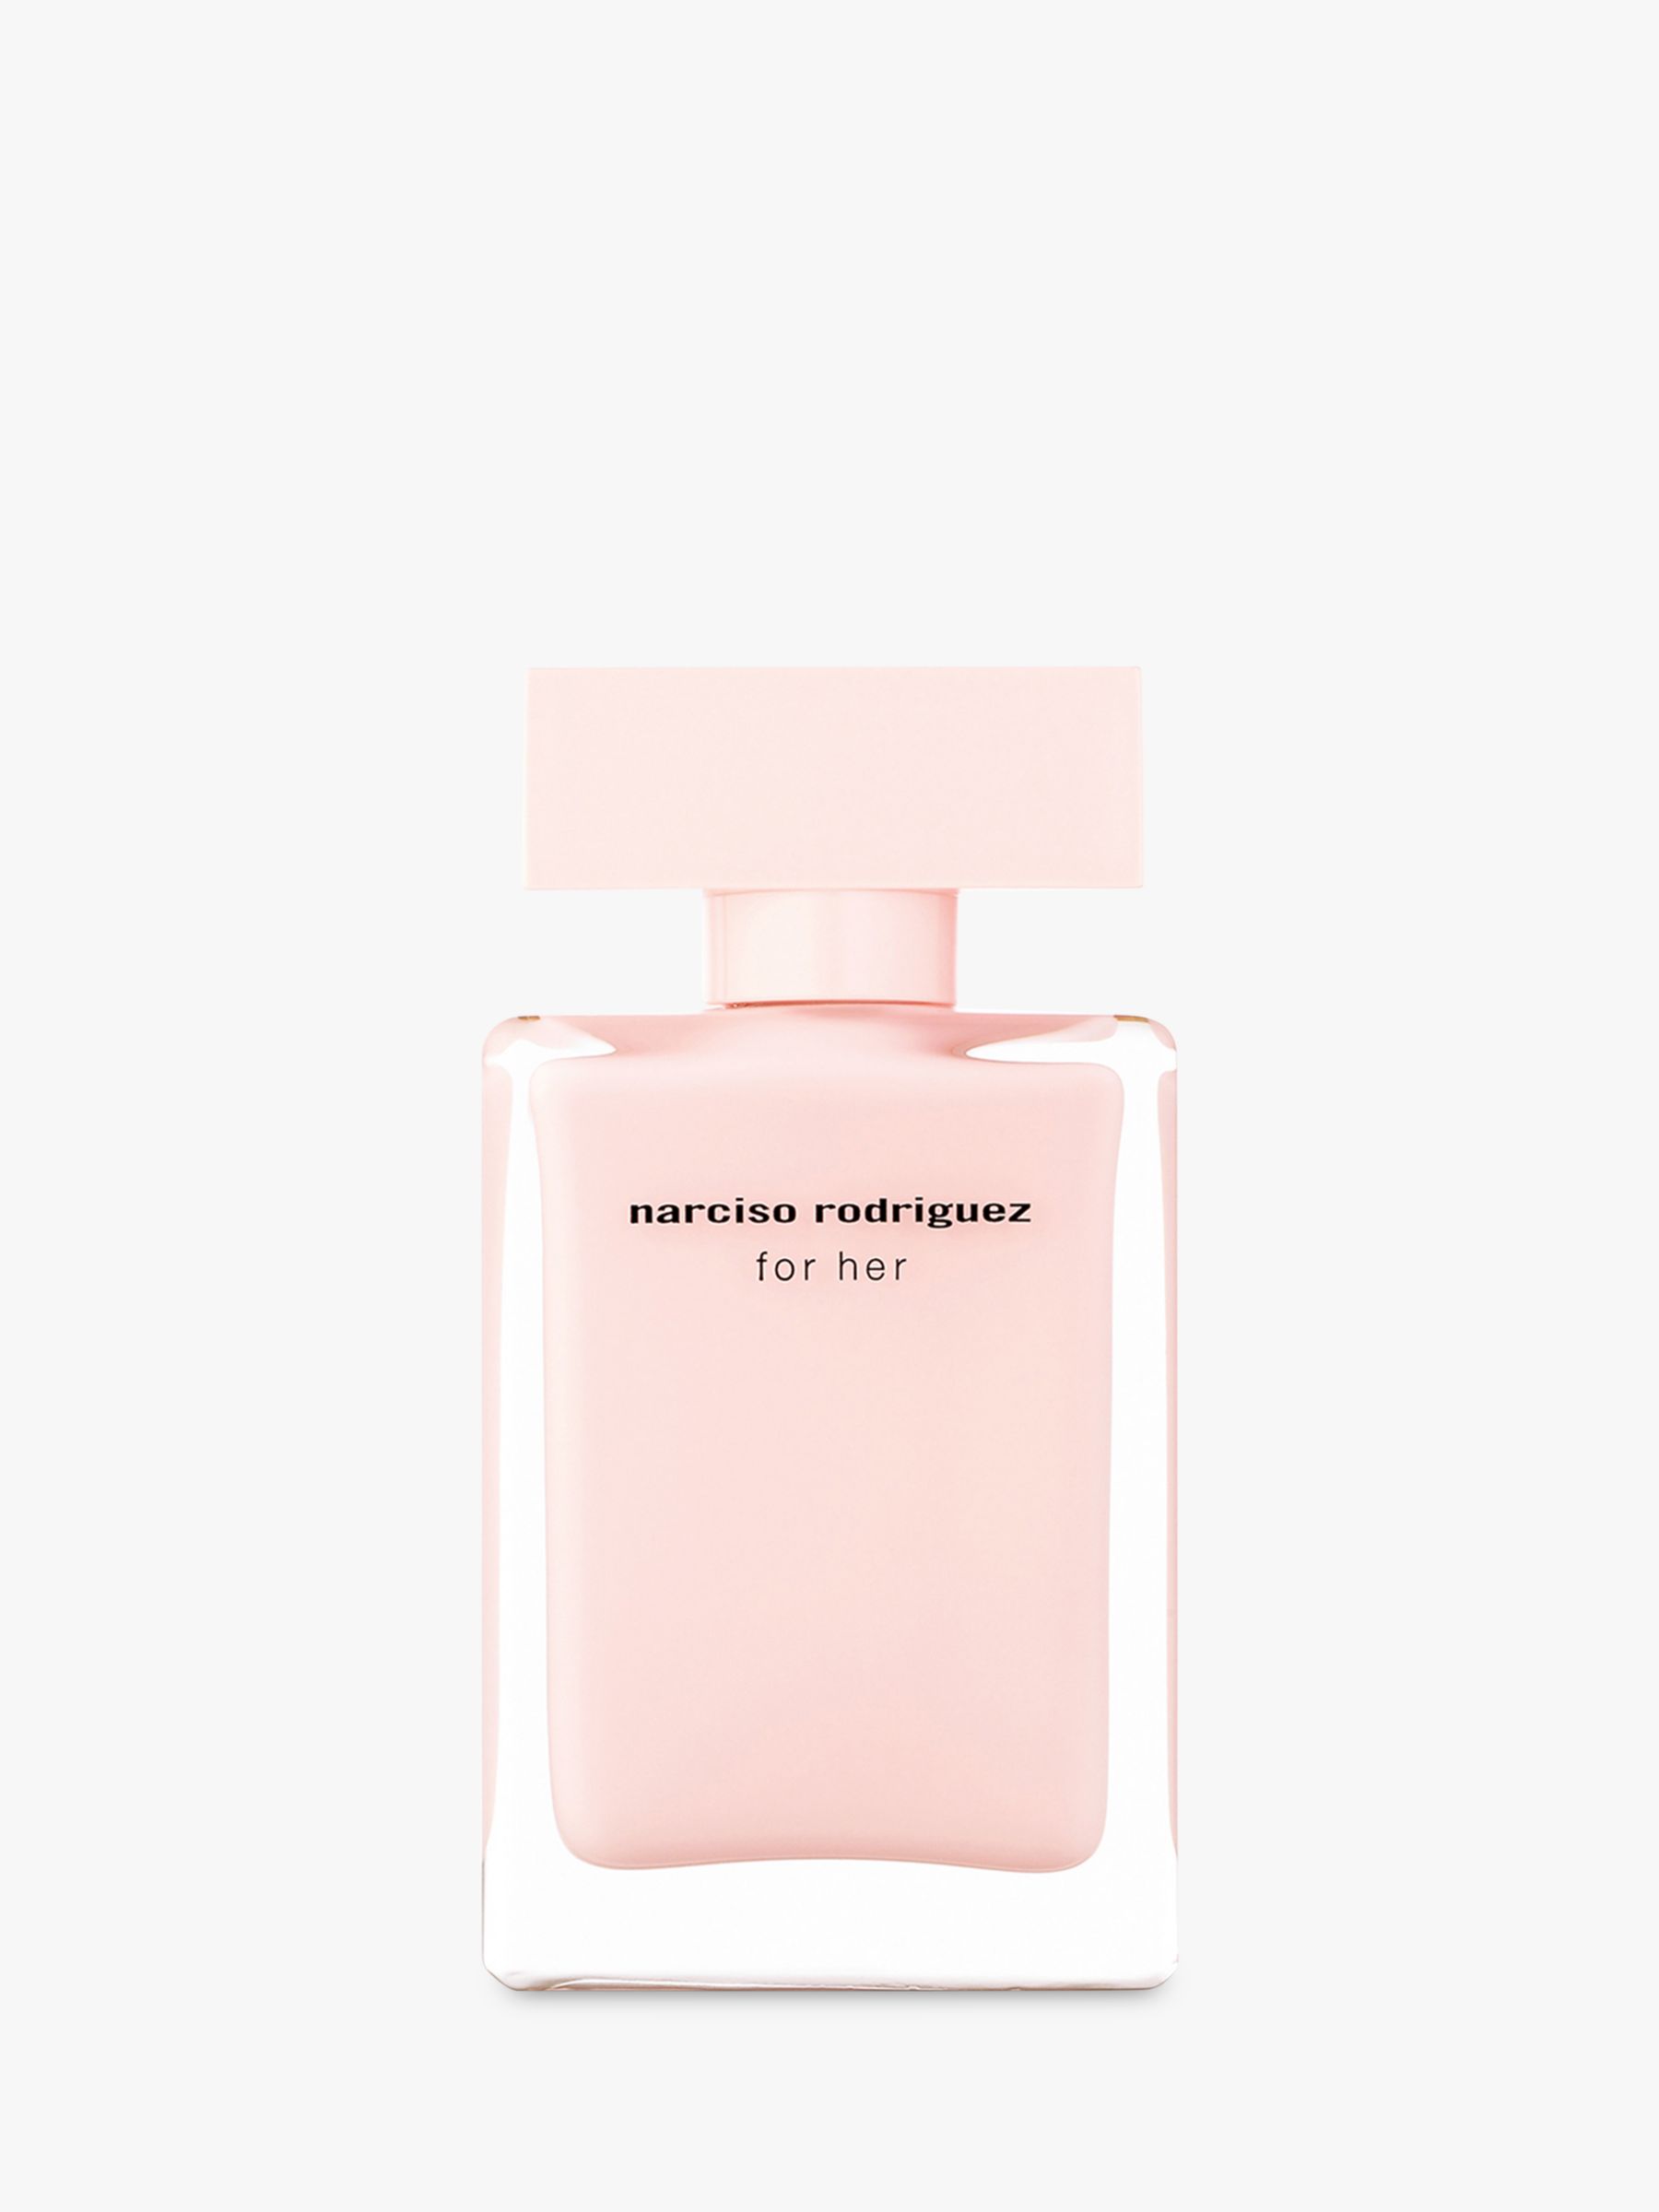 Narciso Rodriguez for Her Eau de Parfum, 50ml at John Lewis & Partners